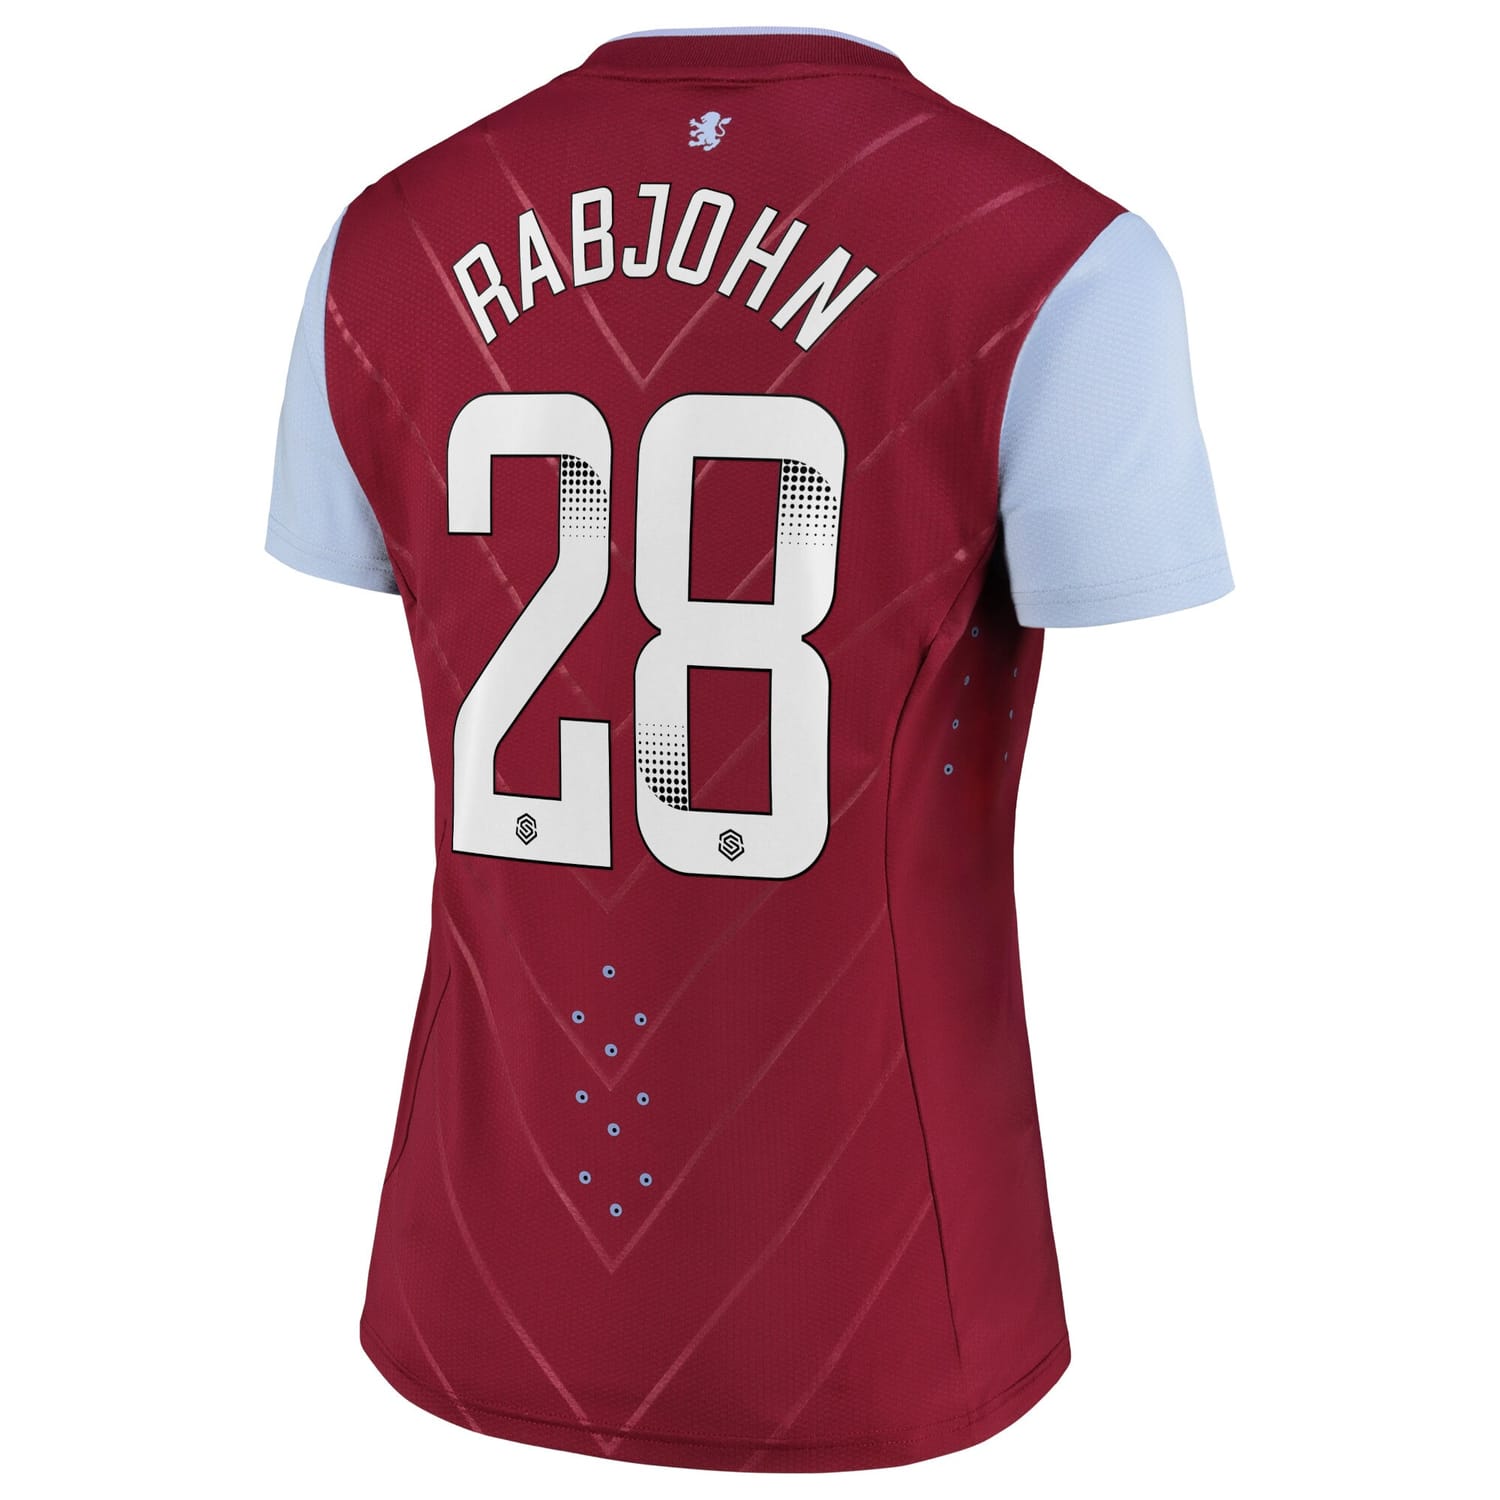 Premier League Aston Villa Home WSL Pro Jersey Shirt 2022-23 player Evie Rabjohn 28 printing for Women